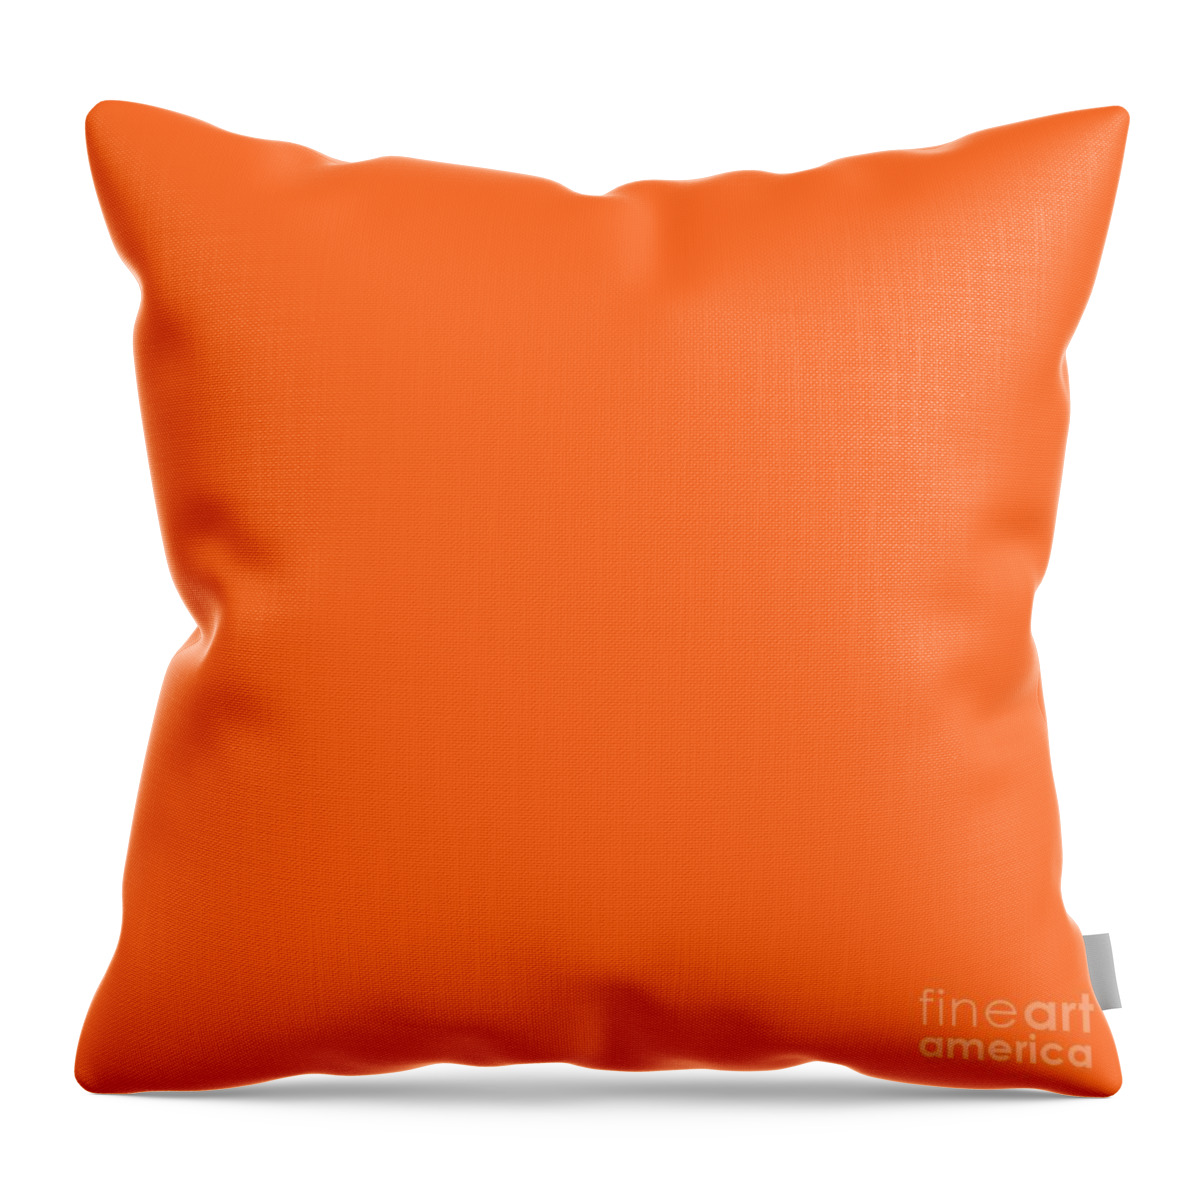 Orange Throw Pillow featuring the digital art Solid Plain Orange for Home Decor by Delynn Addams